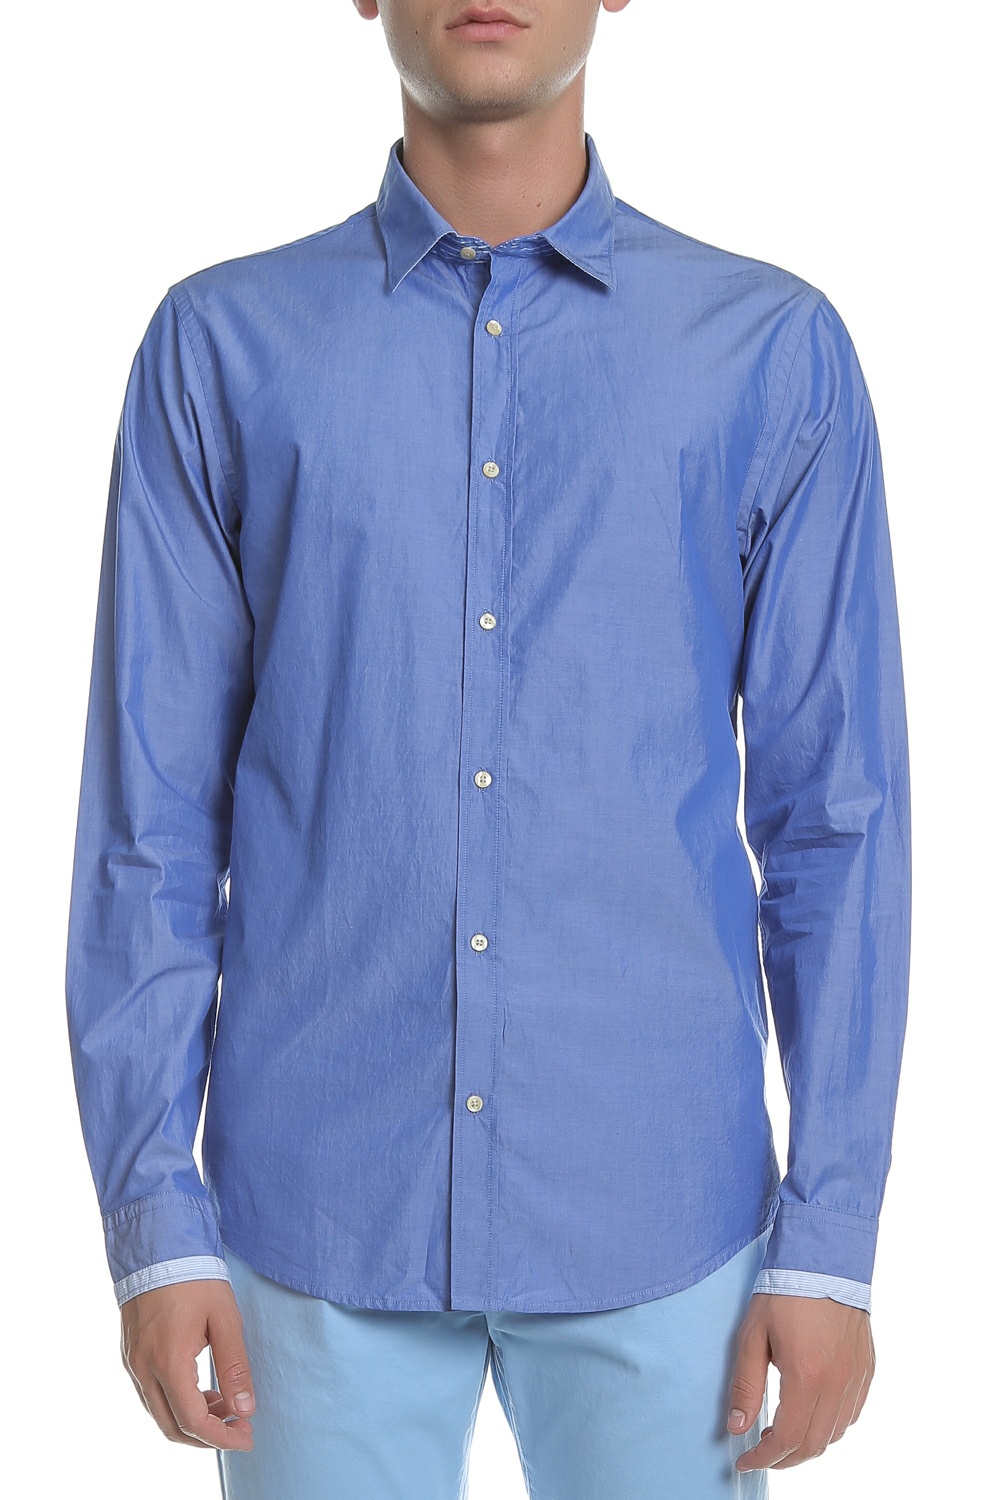 SCOTCH & SODA – Ανδρικό πουκάμισο Scotch & Soda μπλε 1605219.0-0207